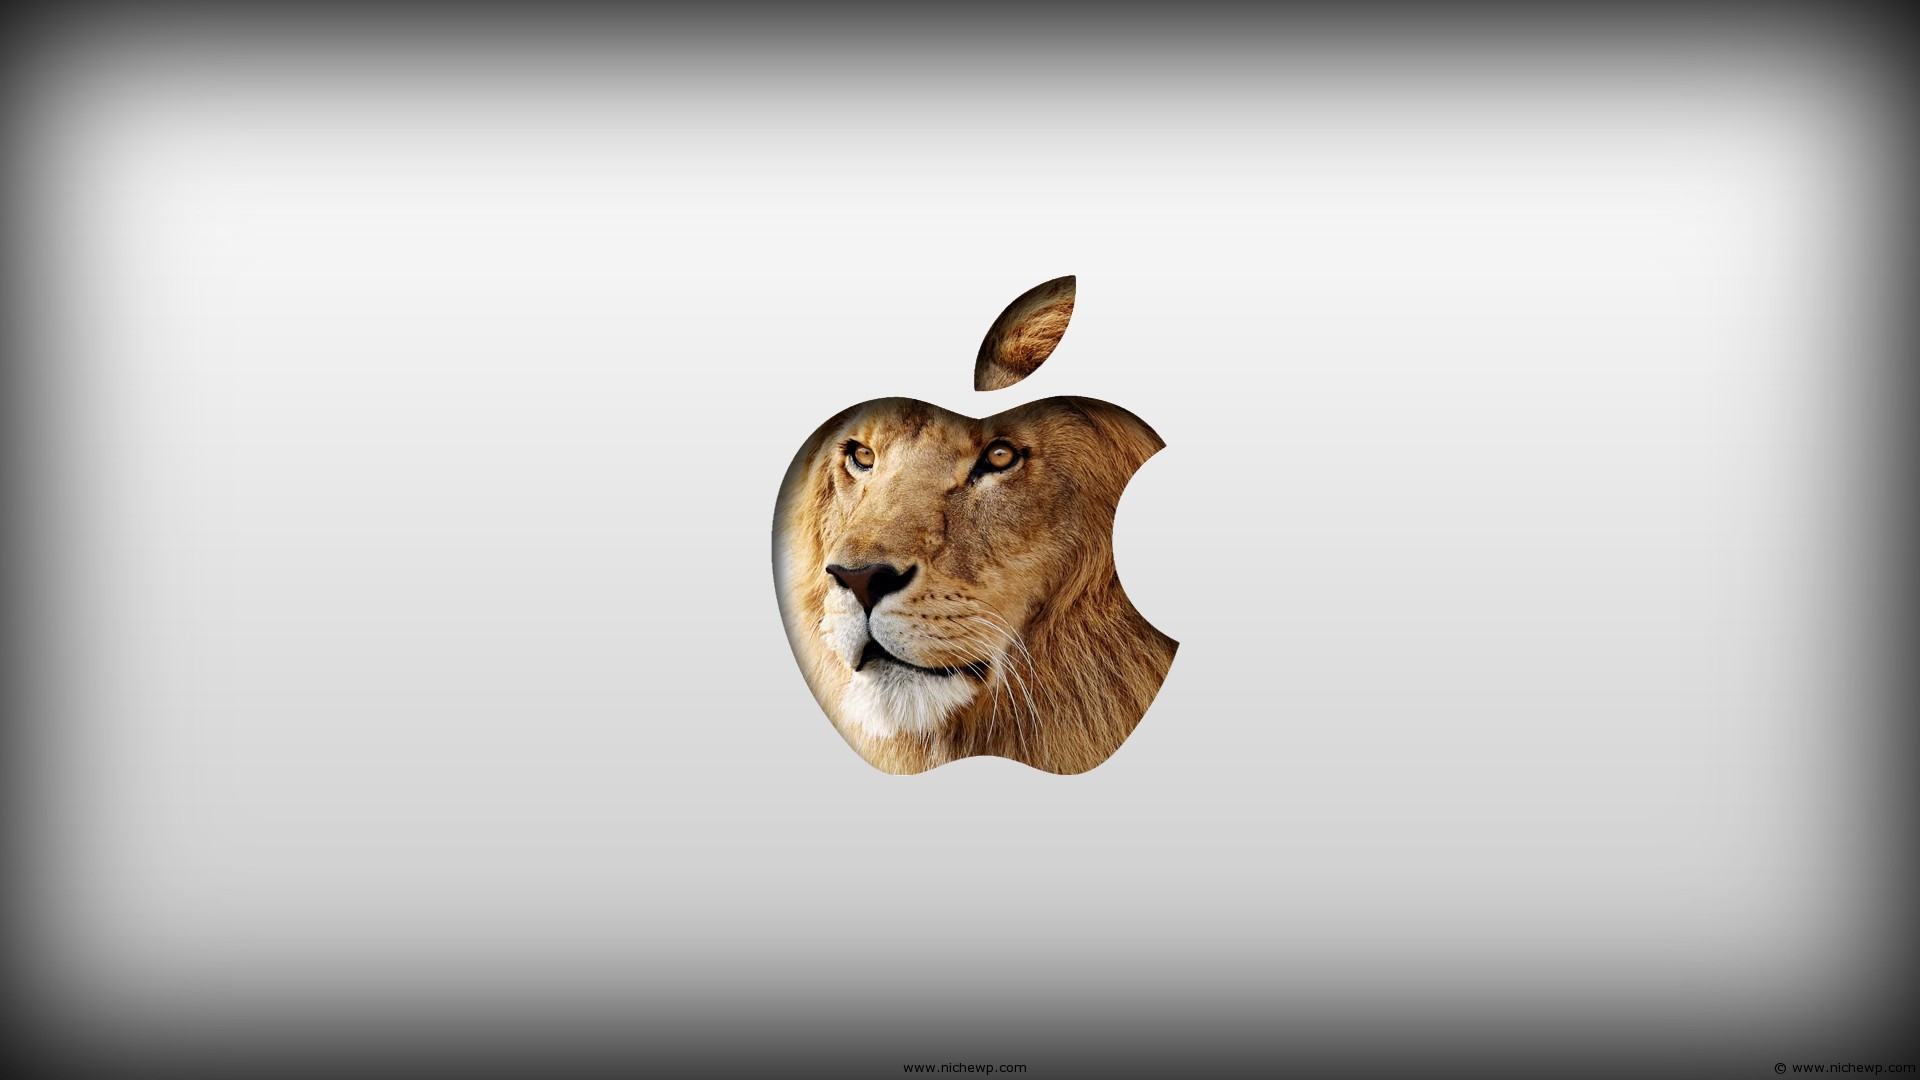 Apple Watch Wallpaper Smartwatch Background Lion of Judah - Etsy